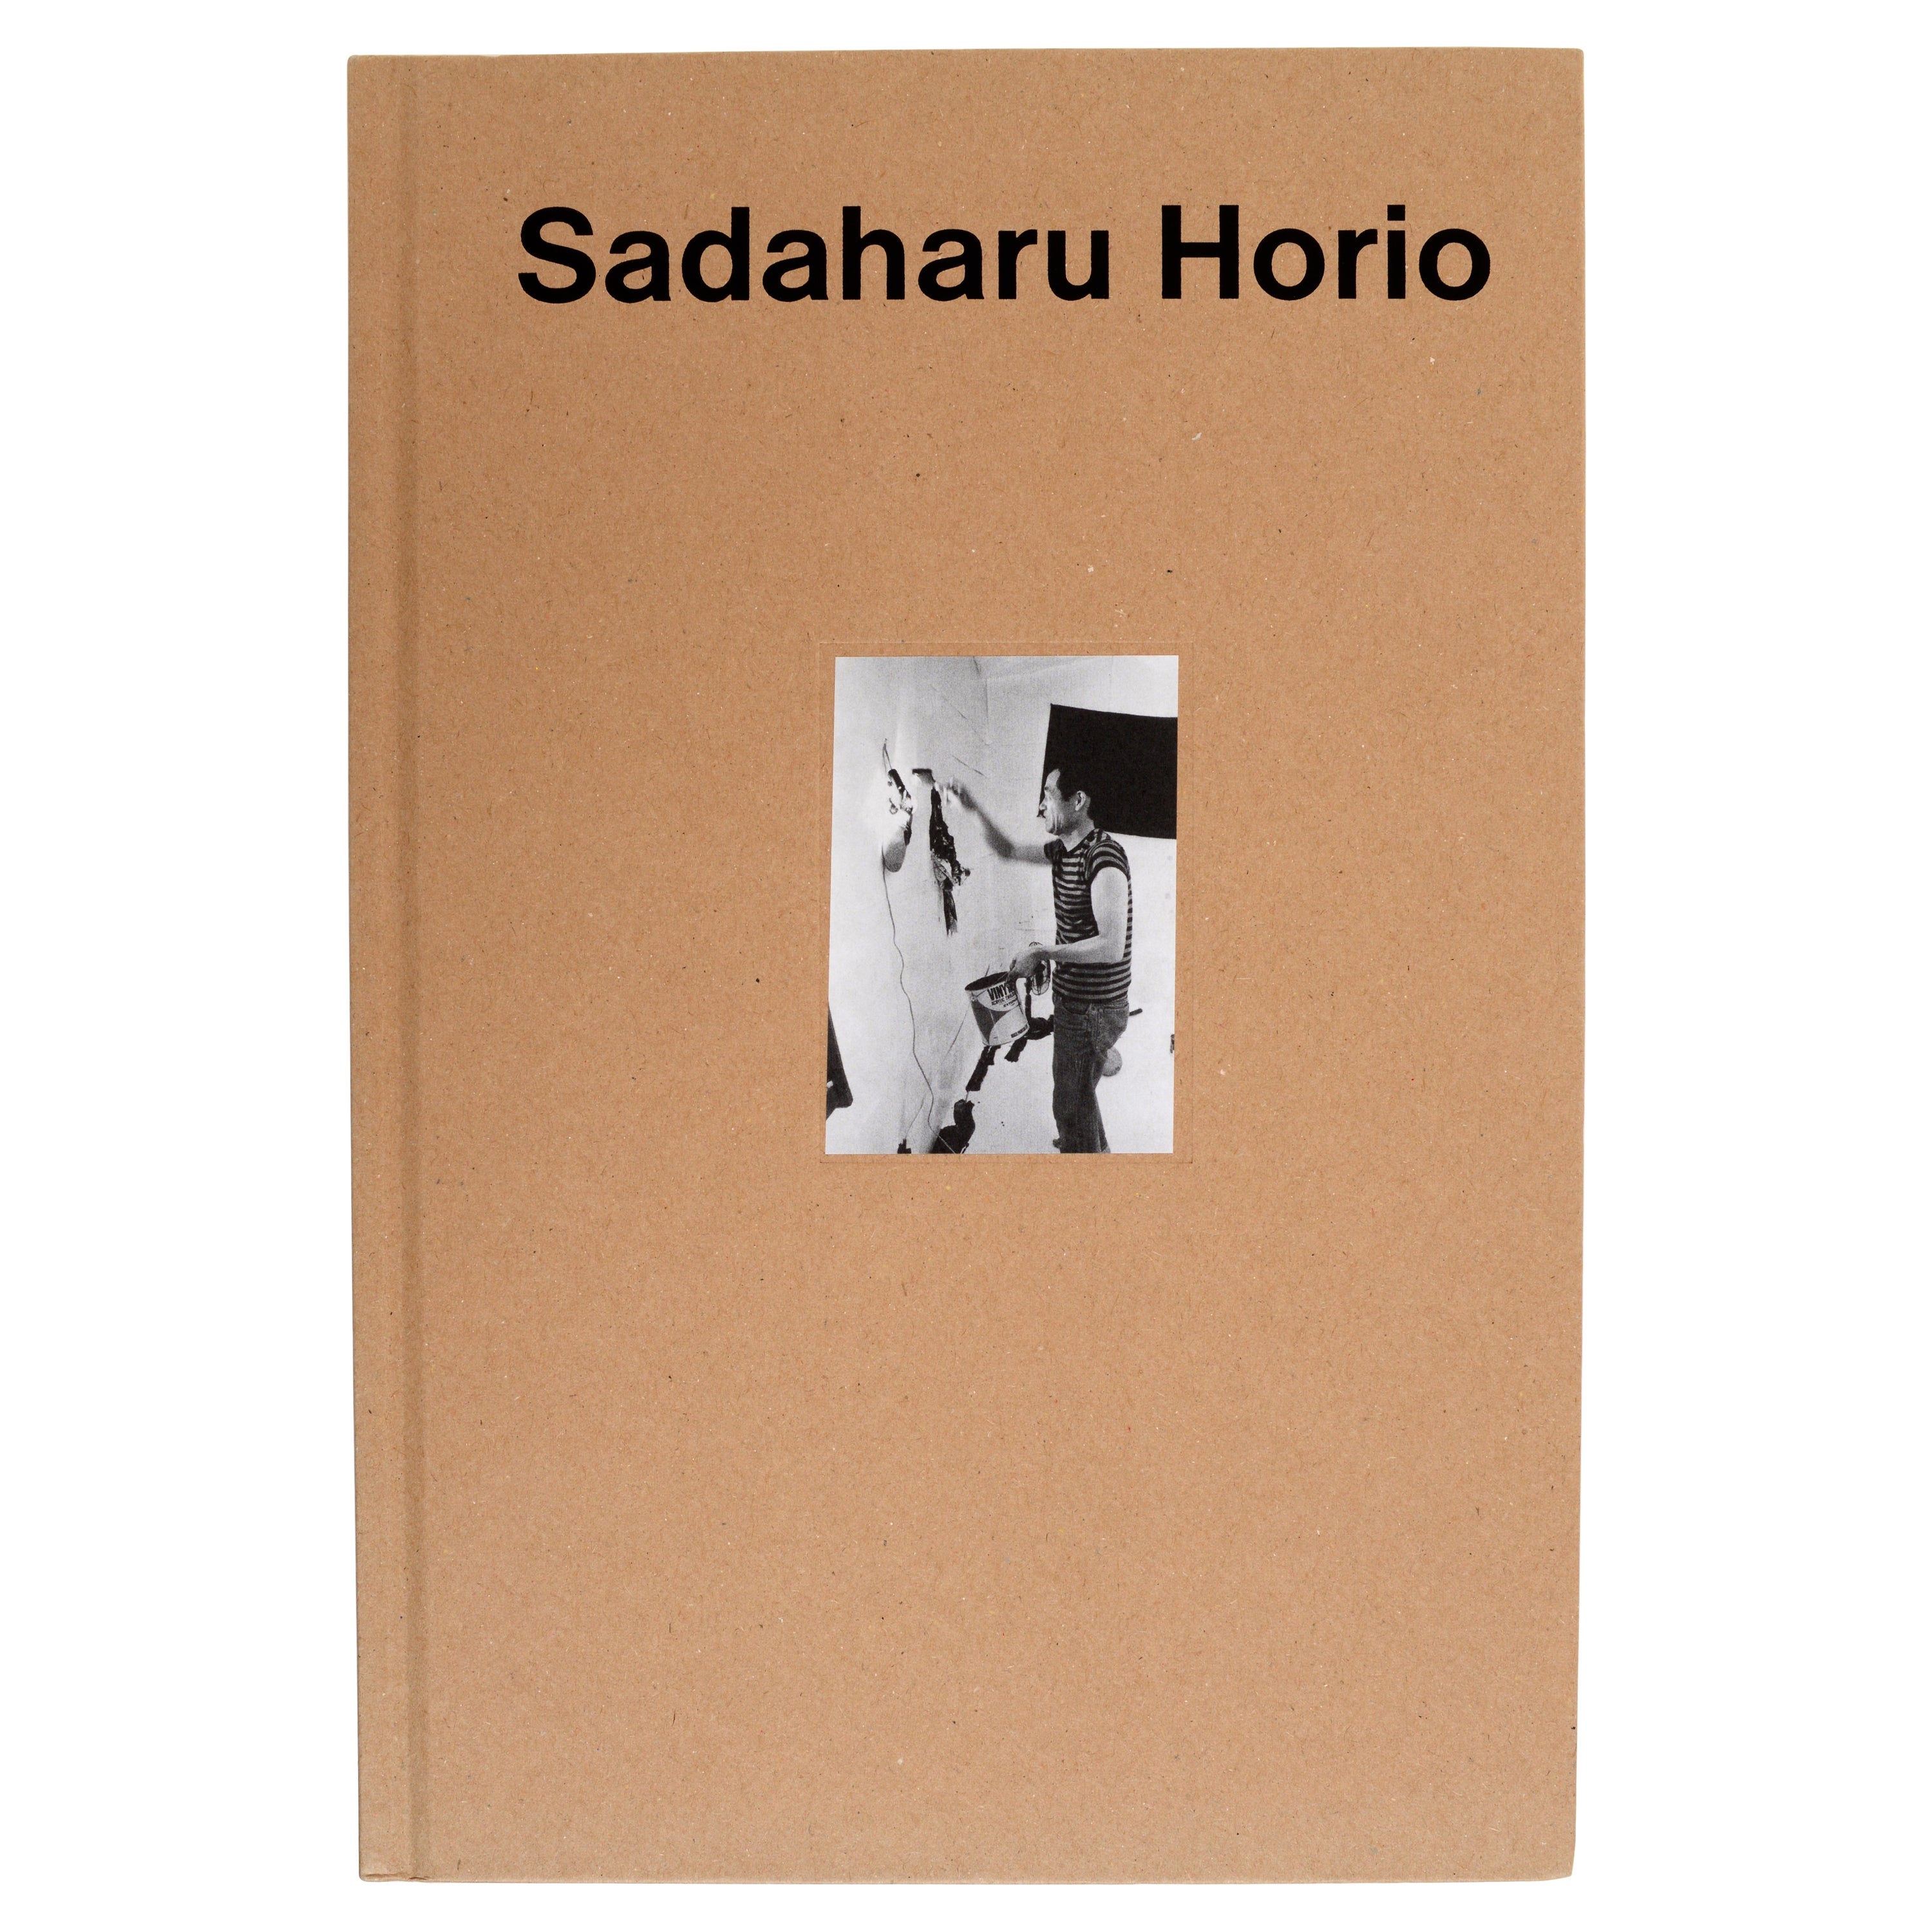 Sadaharu Horio by Atsuo Yamamoto, Axel Vervoordt and Heinz-Norbert Joks For Sale